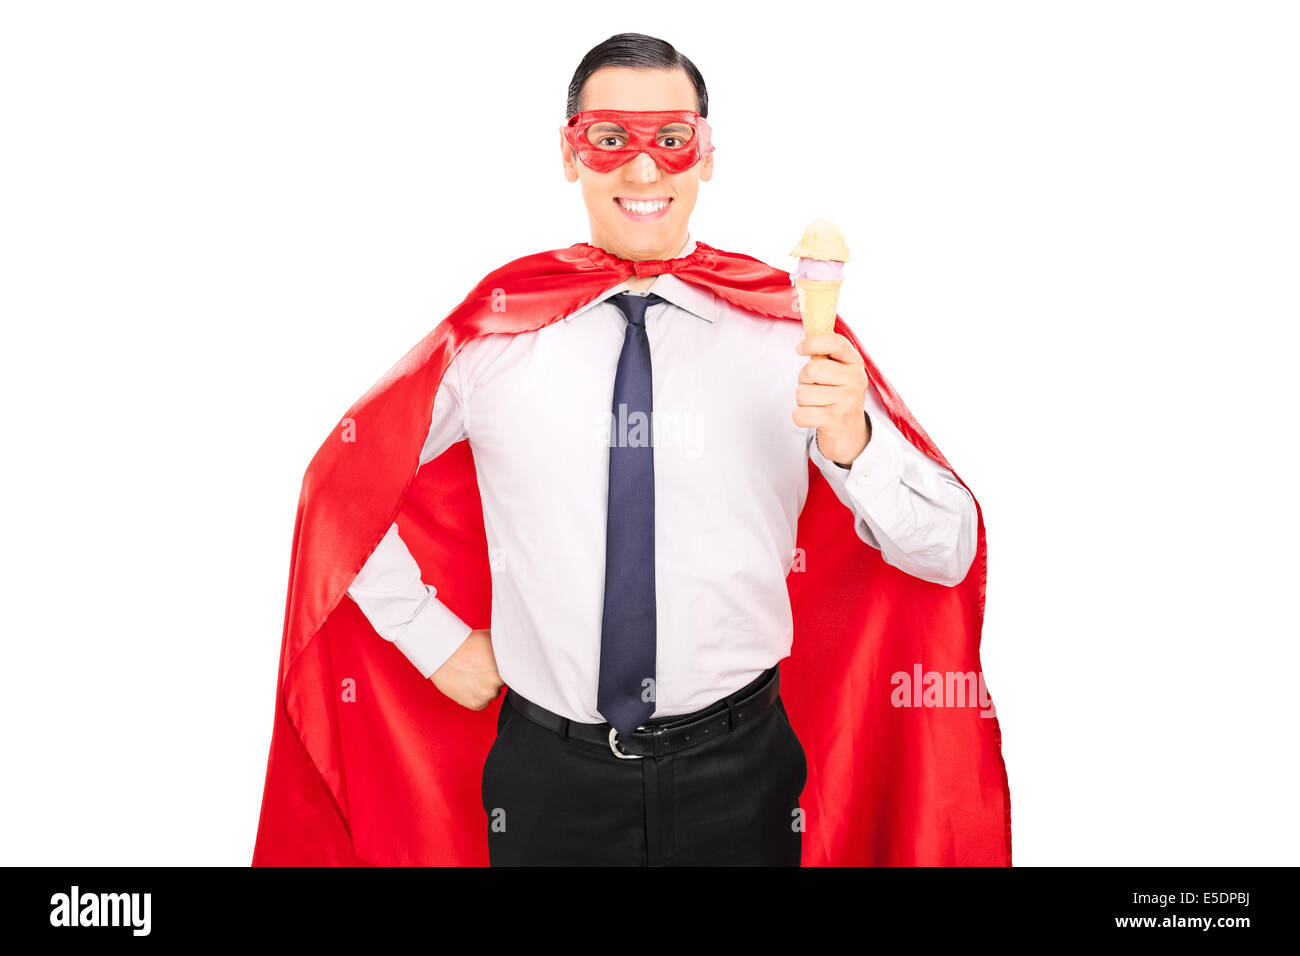 Joyful superhero holding an ice cream Stock Photo